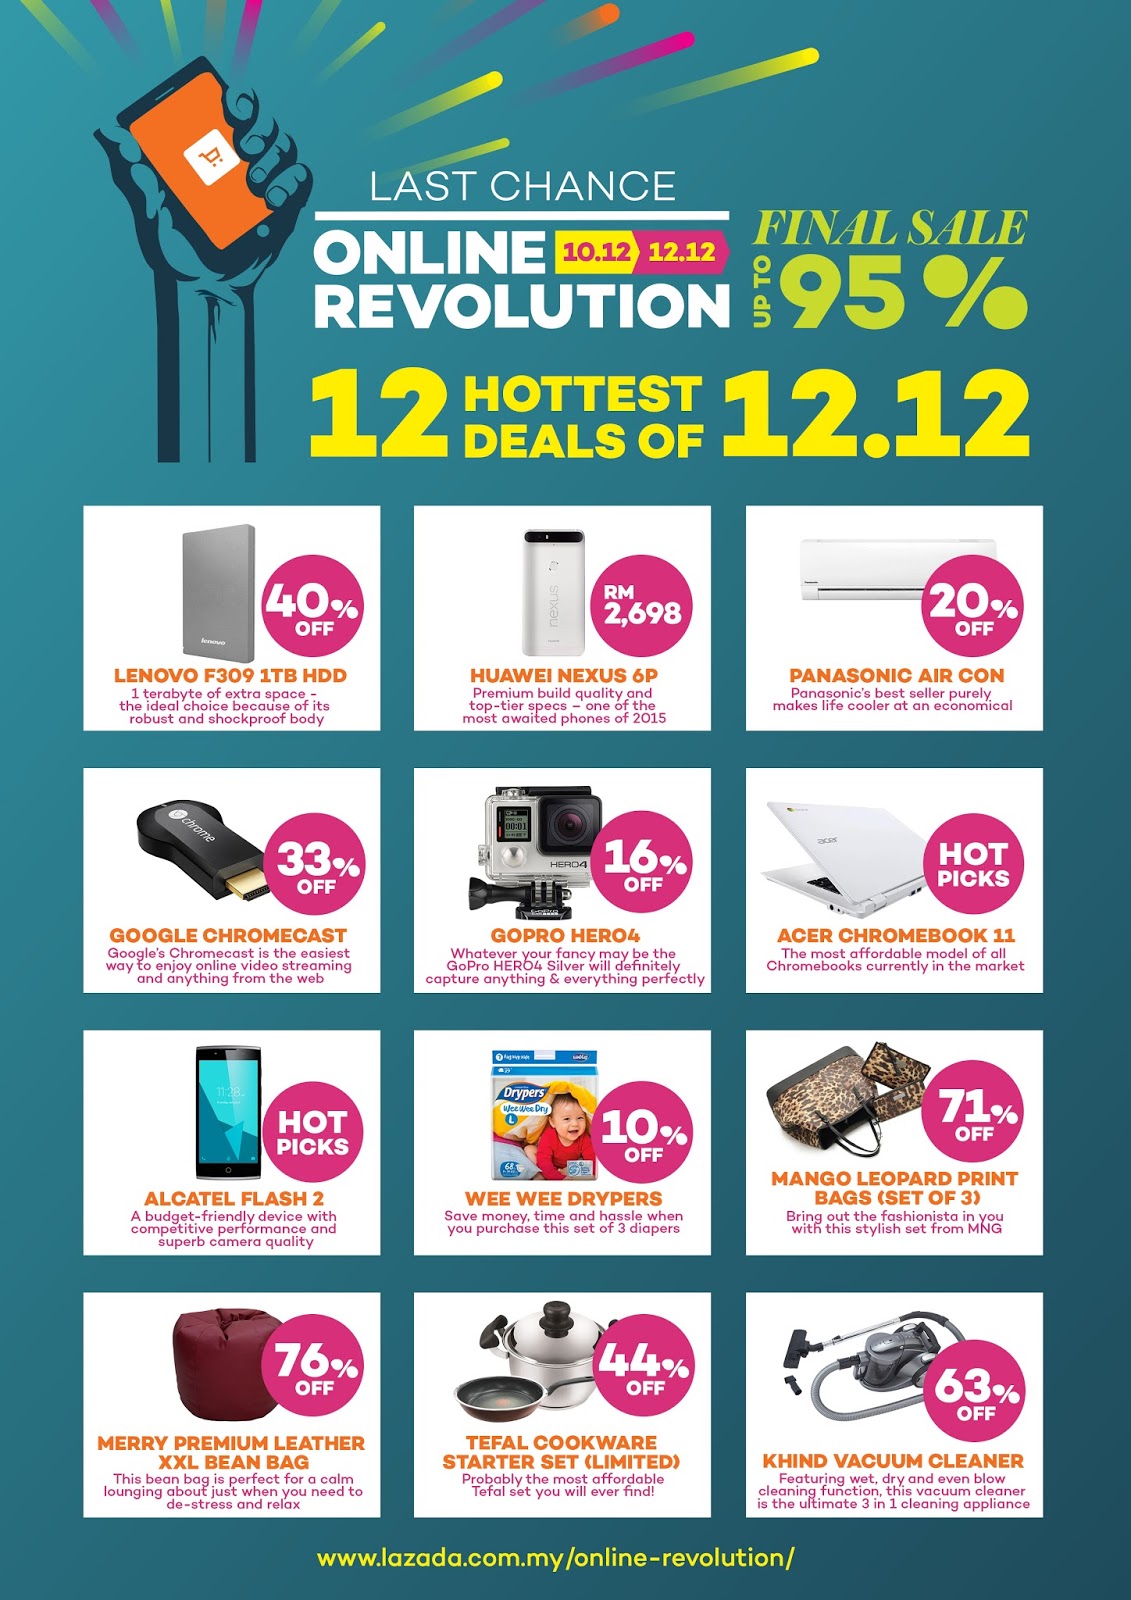 Hottest Deal on 12 December Sale Infographic